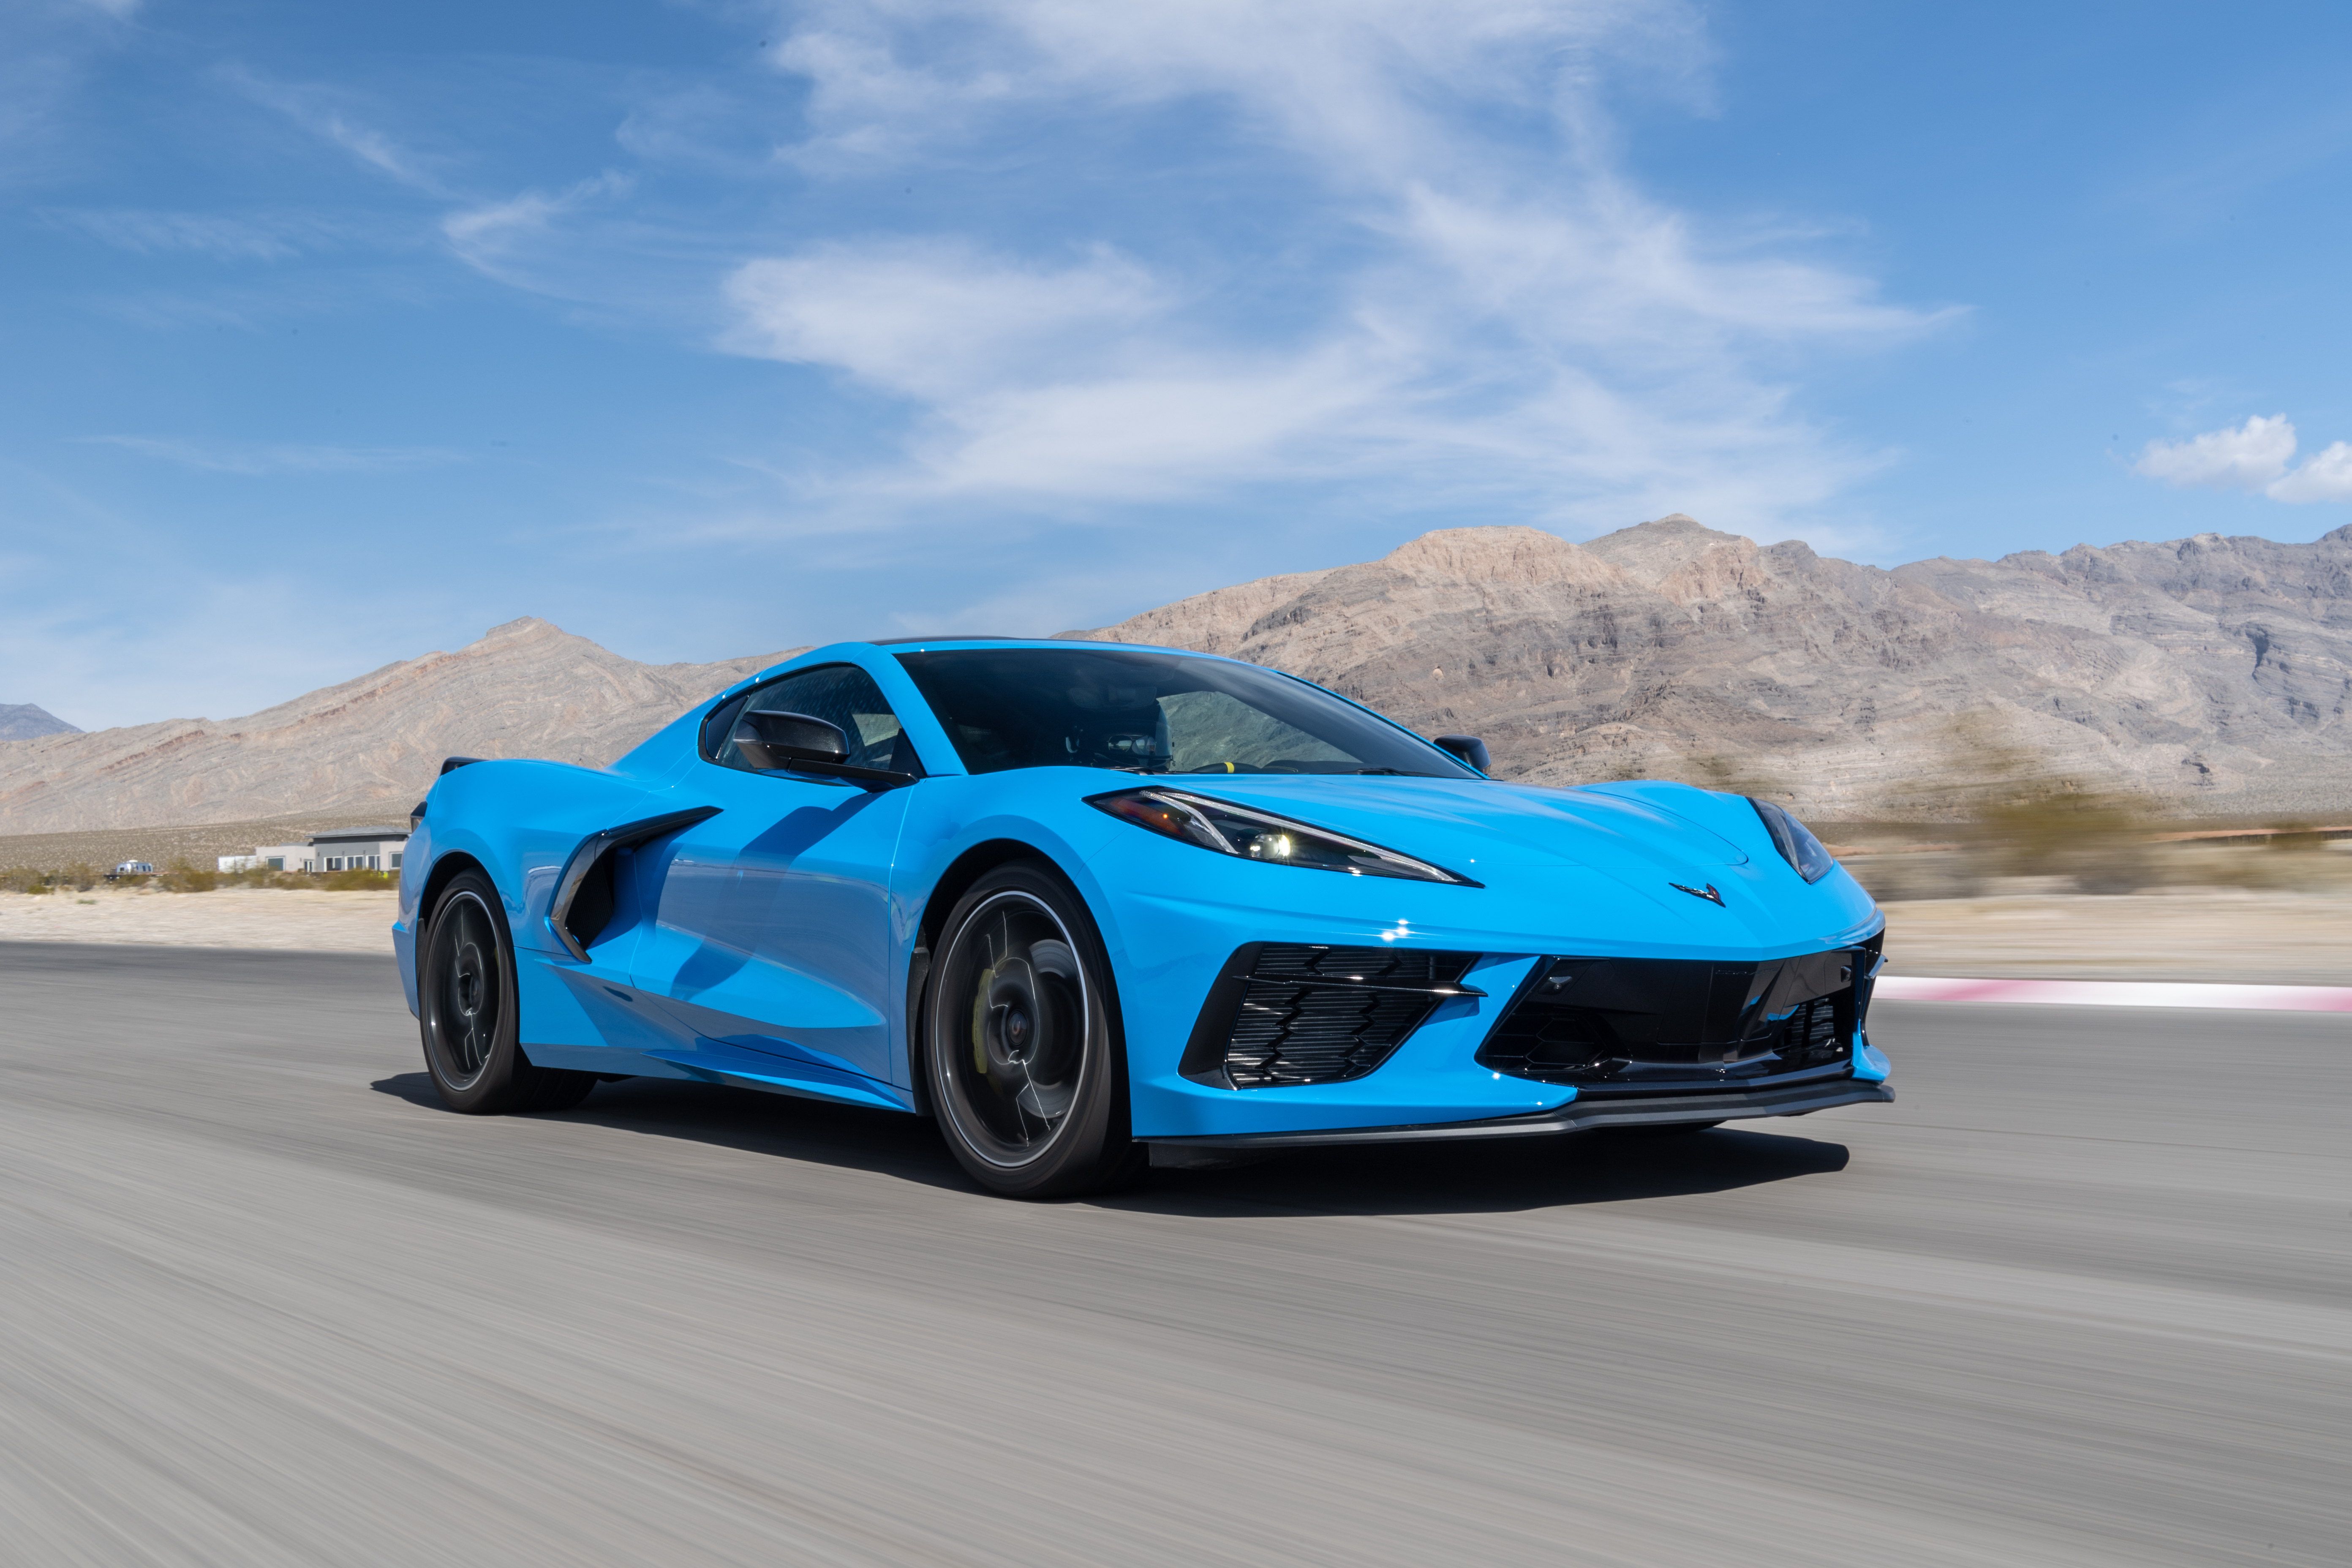 Blue Corvette on the road